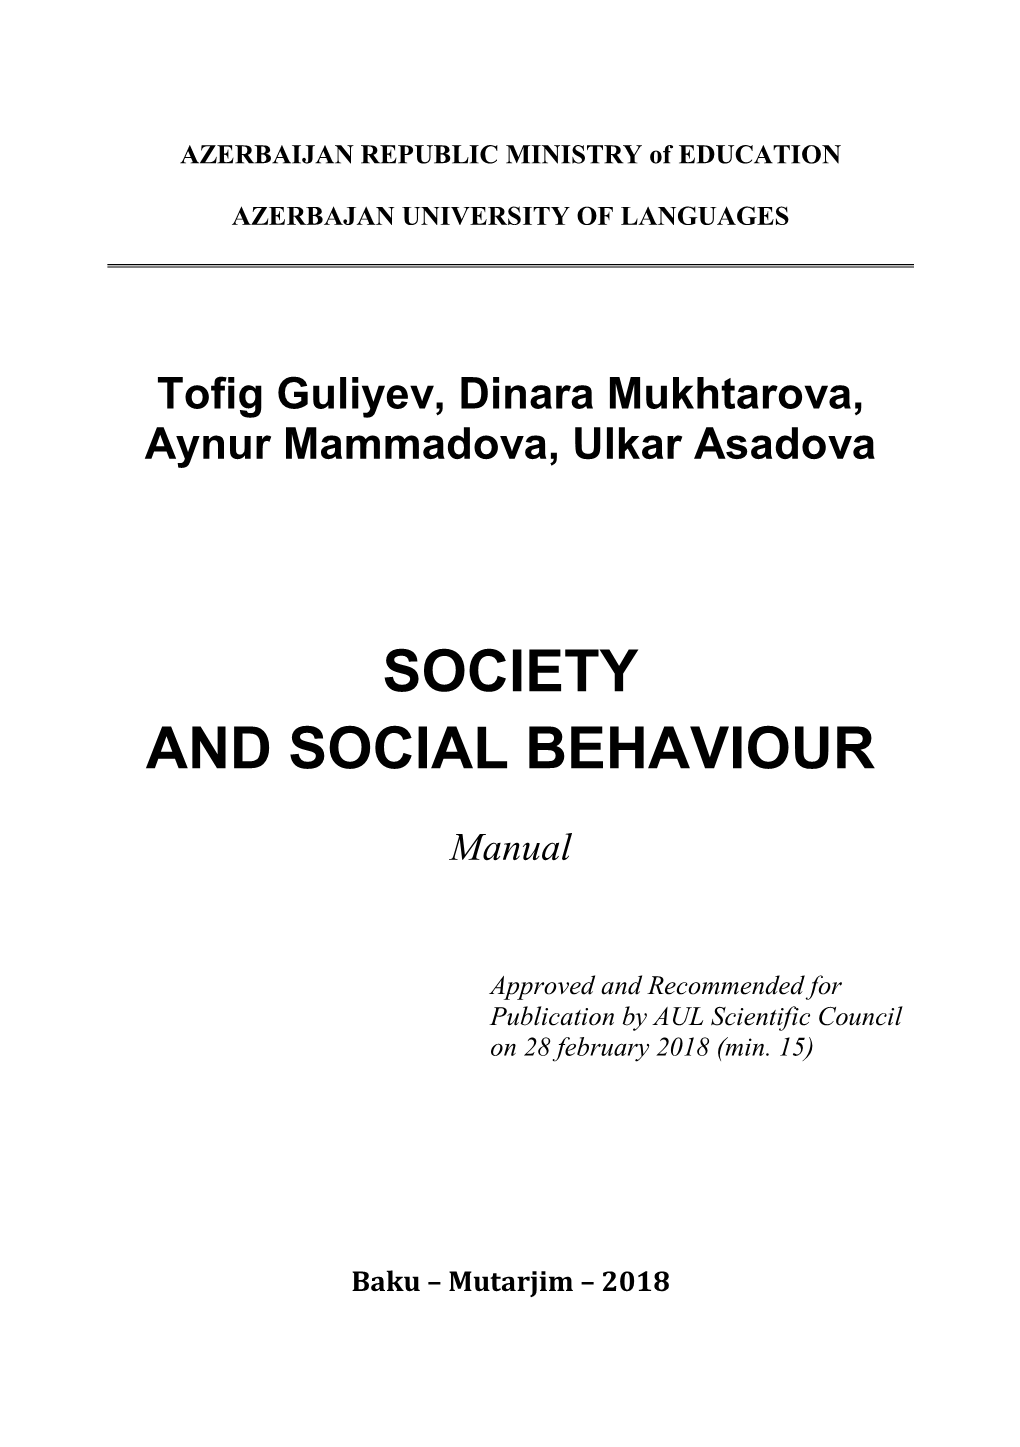 Society and Social Behaviour